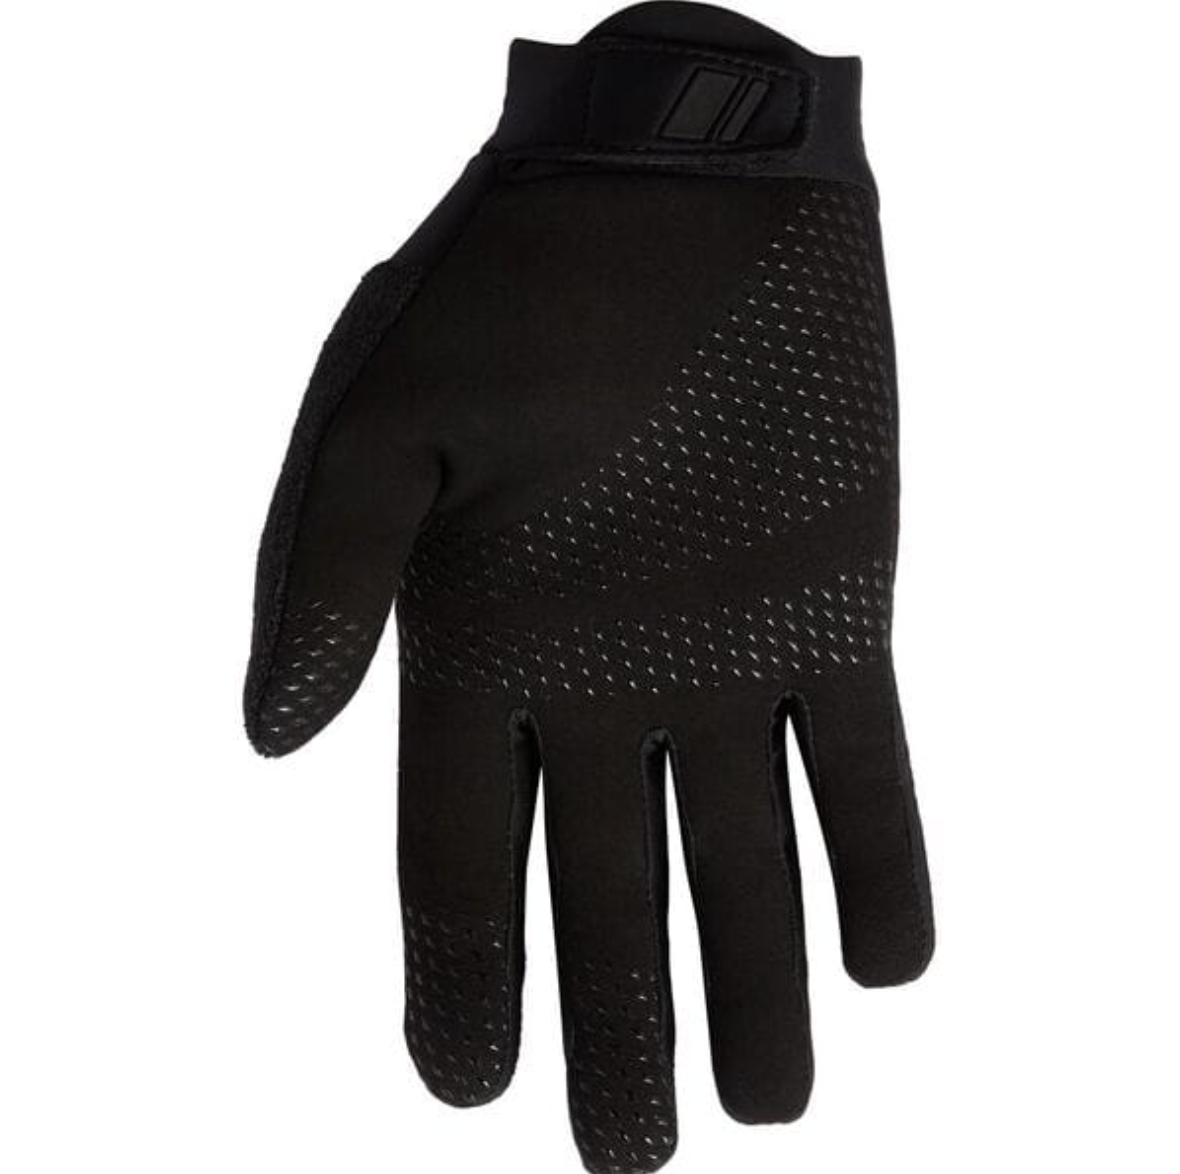 Madison Zenith 4-season DWR Thermal gloves